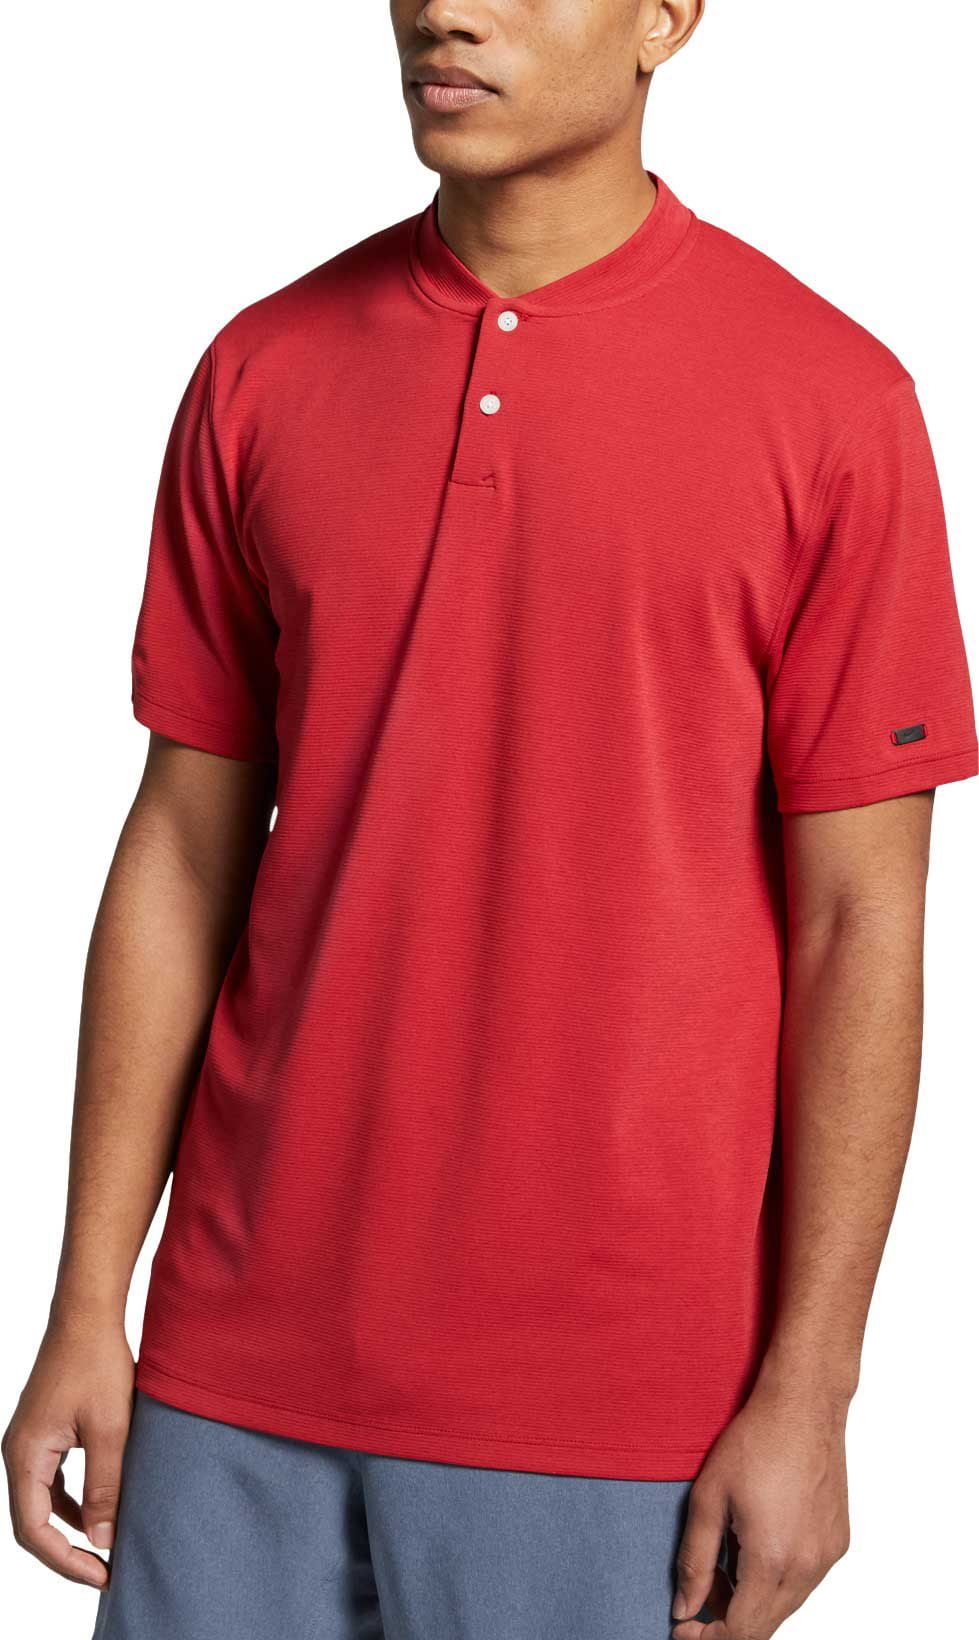 tiger woods red nike golf shirt